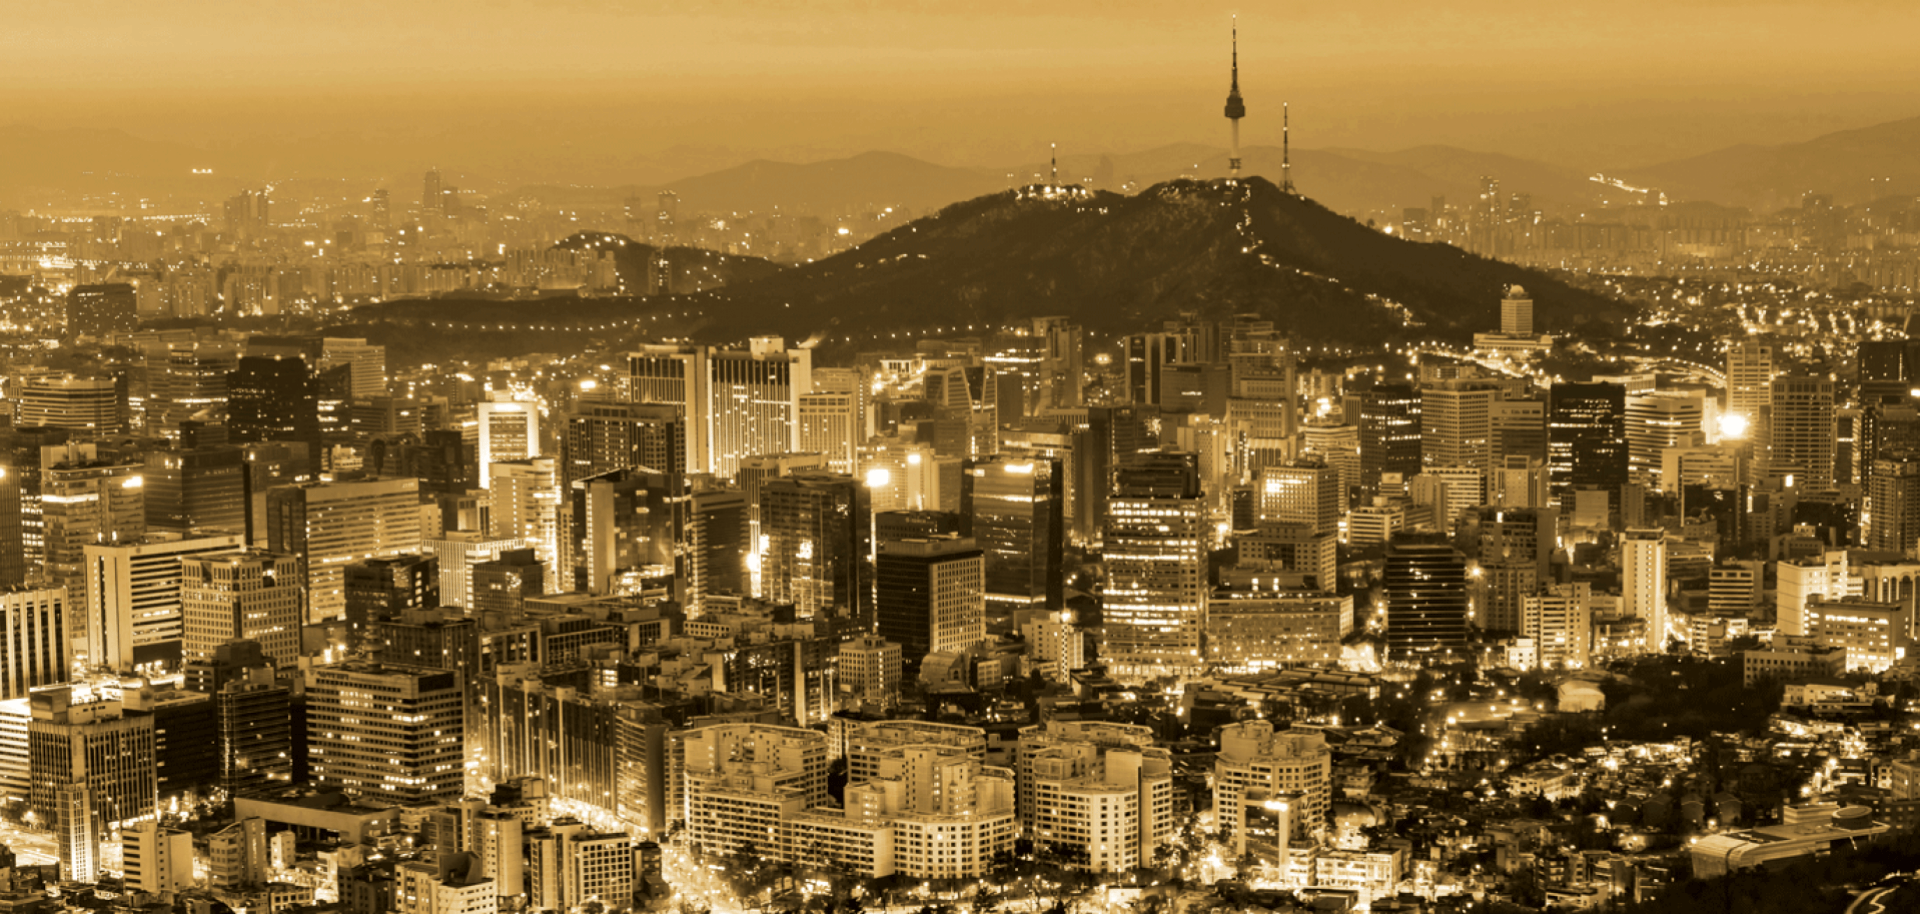 As dusk falls over Seoul, South Korea's bustling capital, the city's skyline comes to life.